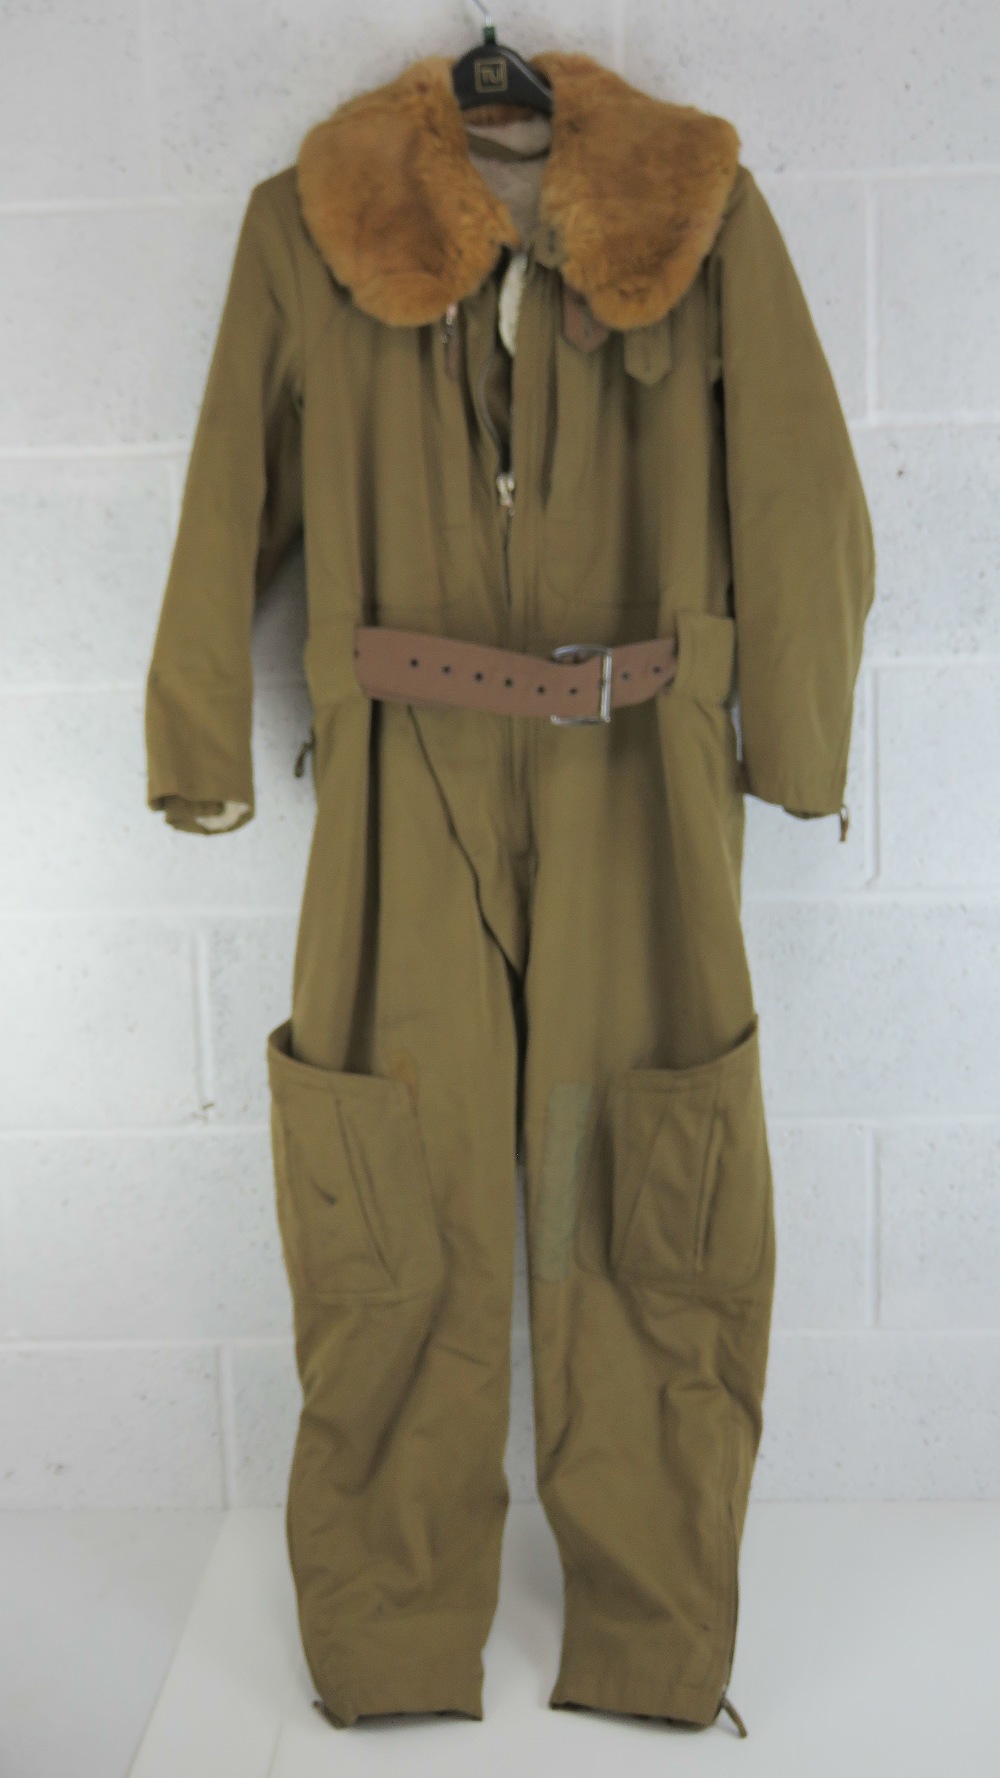 A rare WWII Japanese pilots winter flight suit having fur lining.